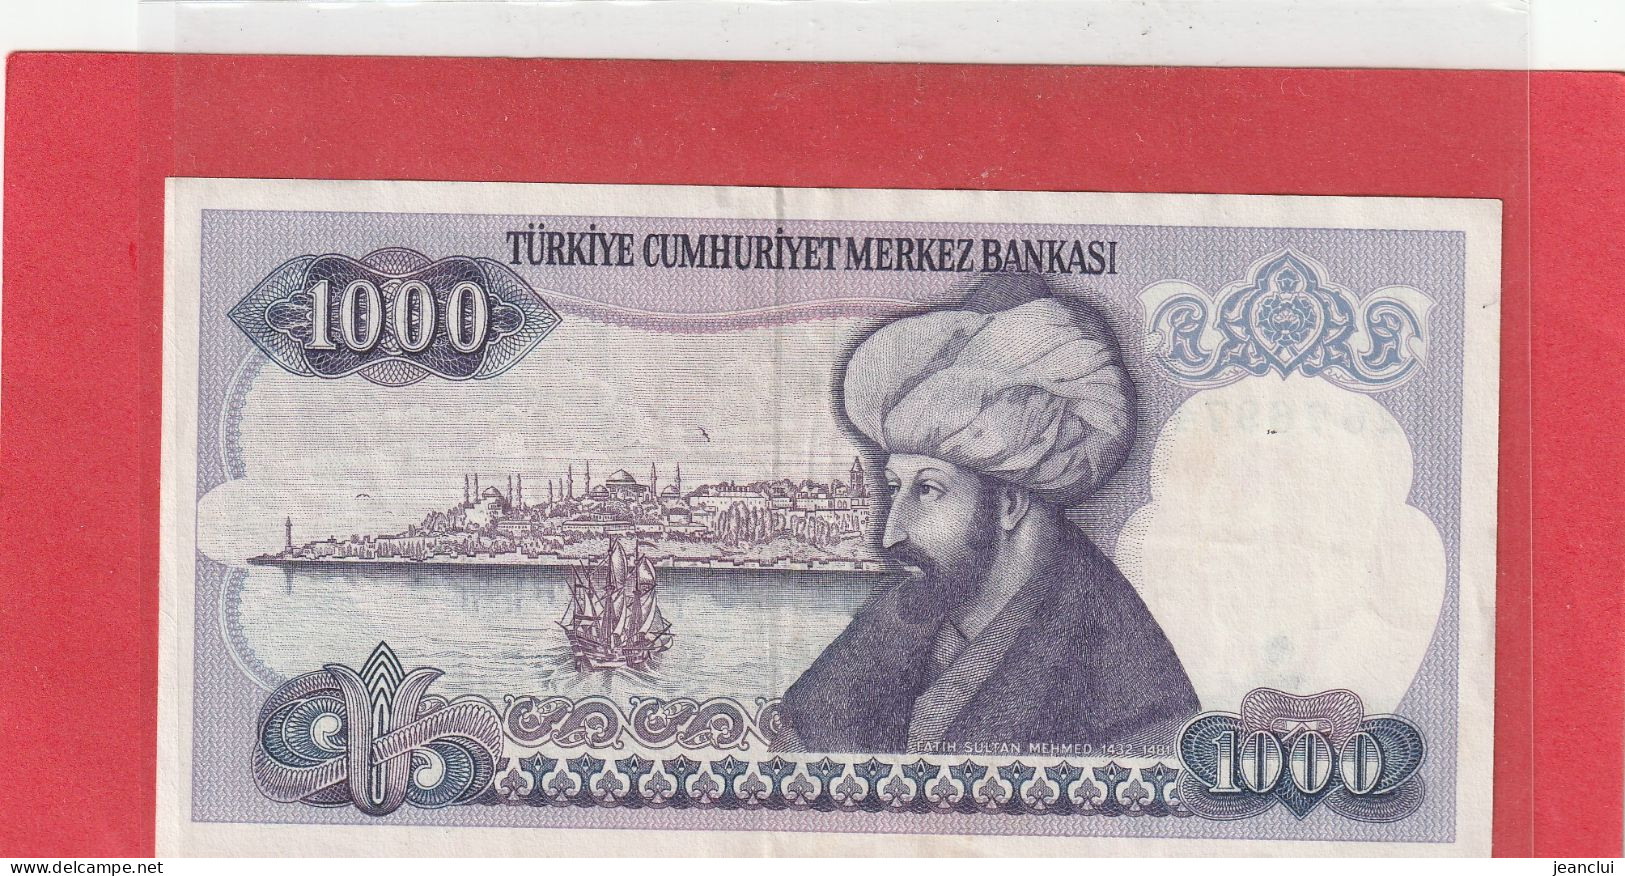 TURKIYE CUMHURIYET MERKEZ BANKASI . 1.000 LIRA . 14 OCAK 1970  . N°  A26 769745 .  2 SCANNES  .  BILLET USITE - Turquie